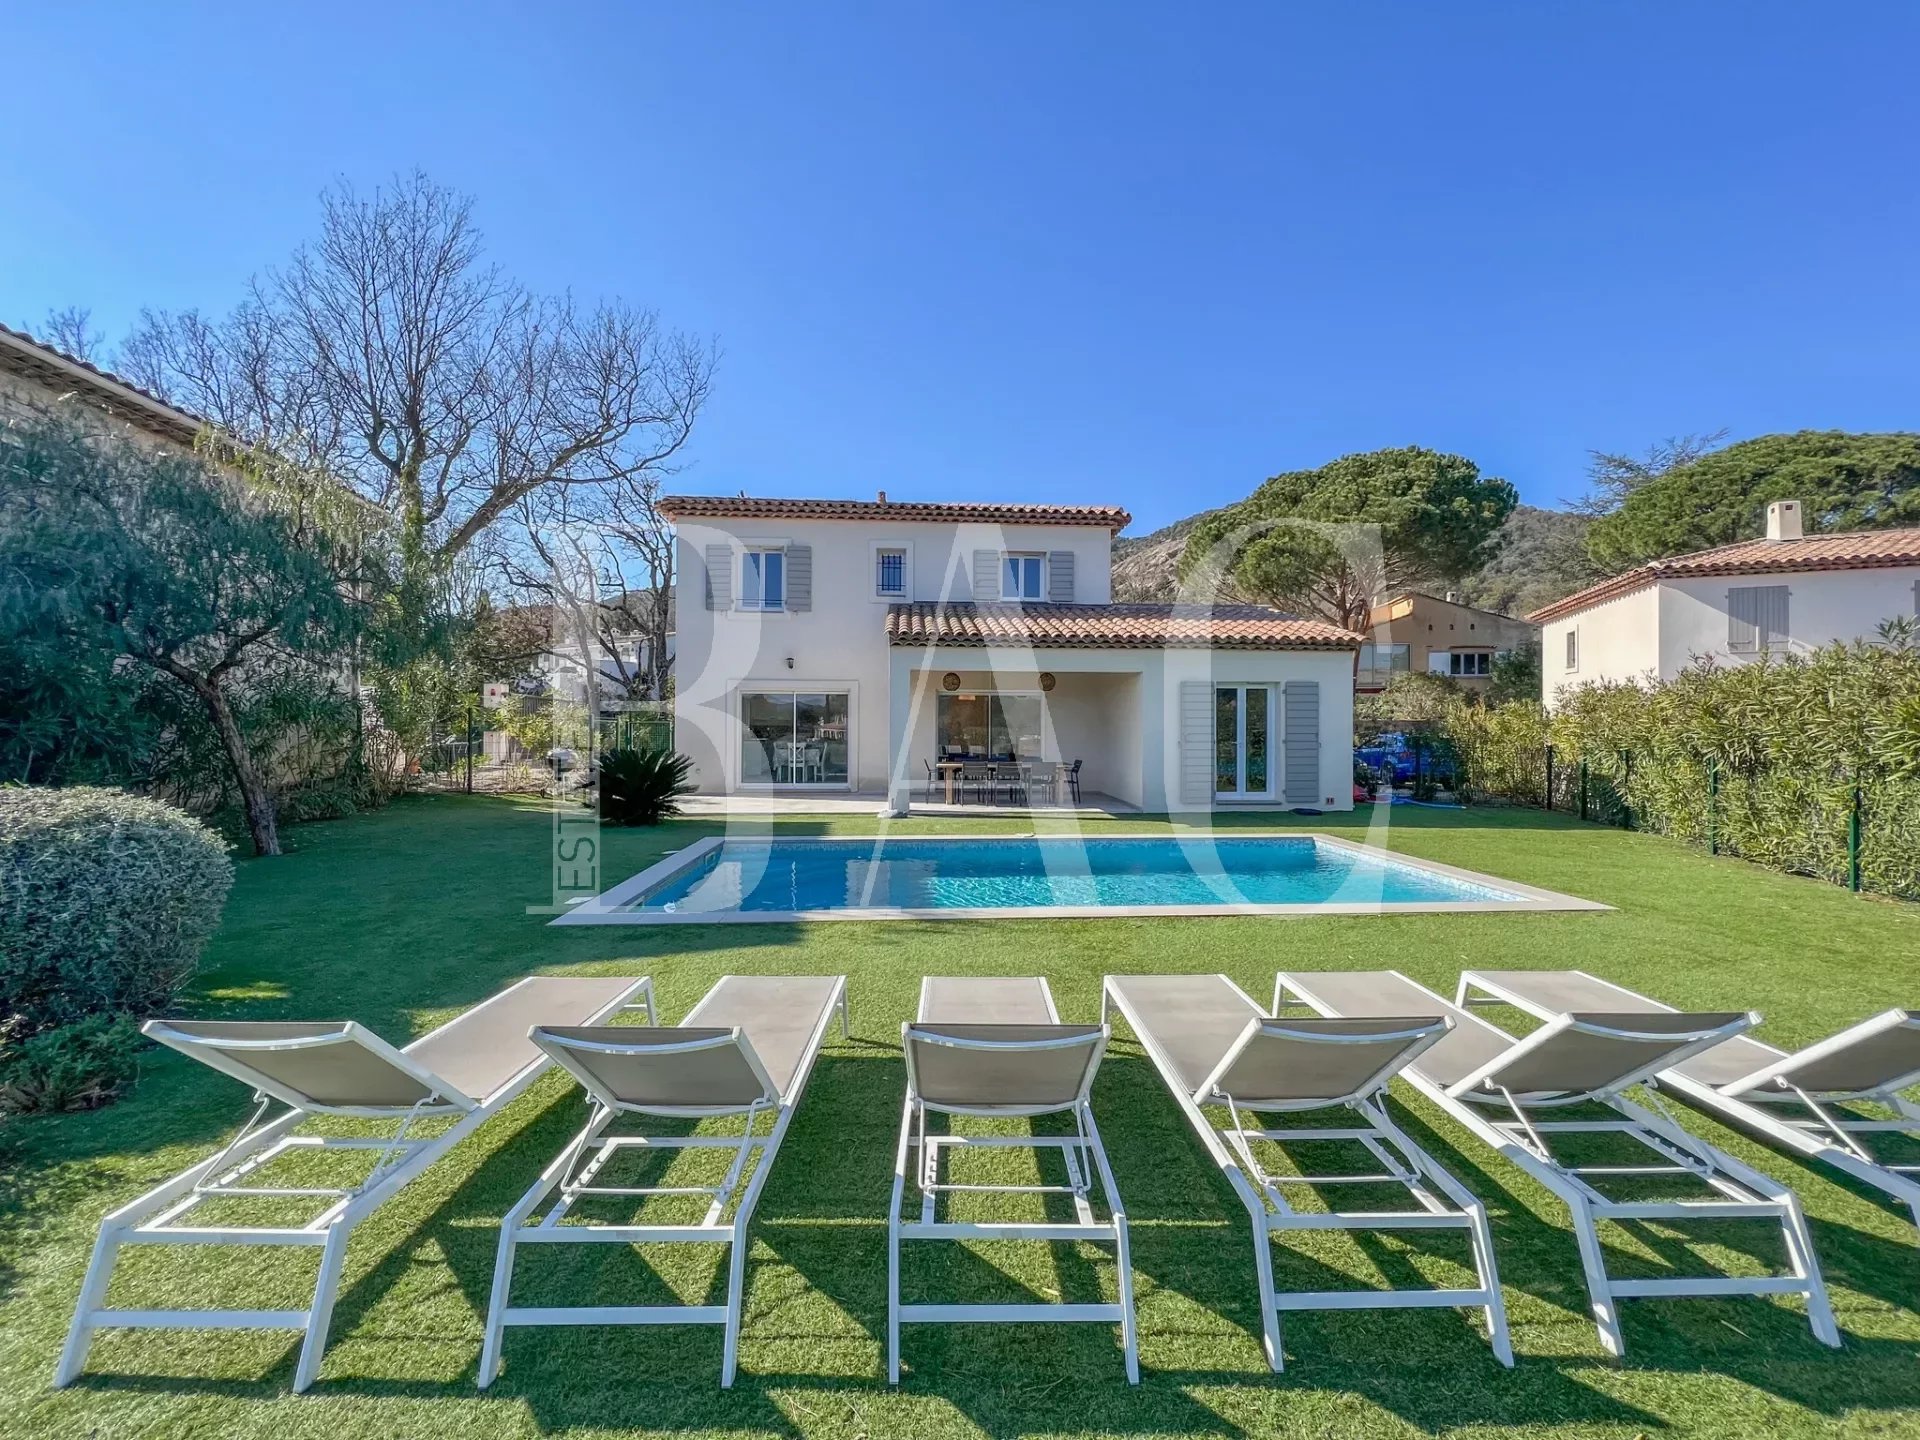 Le-Plan-de-la-Tour, magnificent villa from 2018 located 15 minutes from Sainte-Maxime.